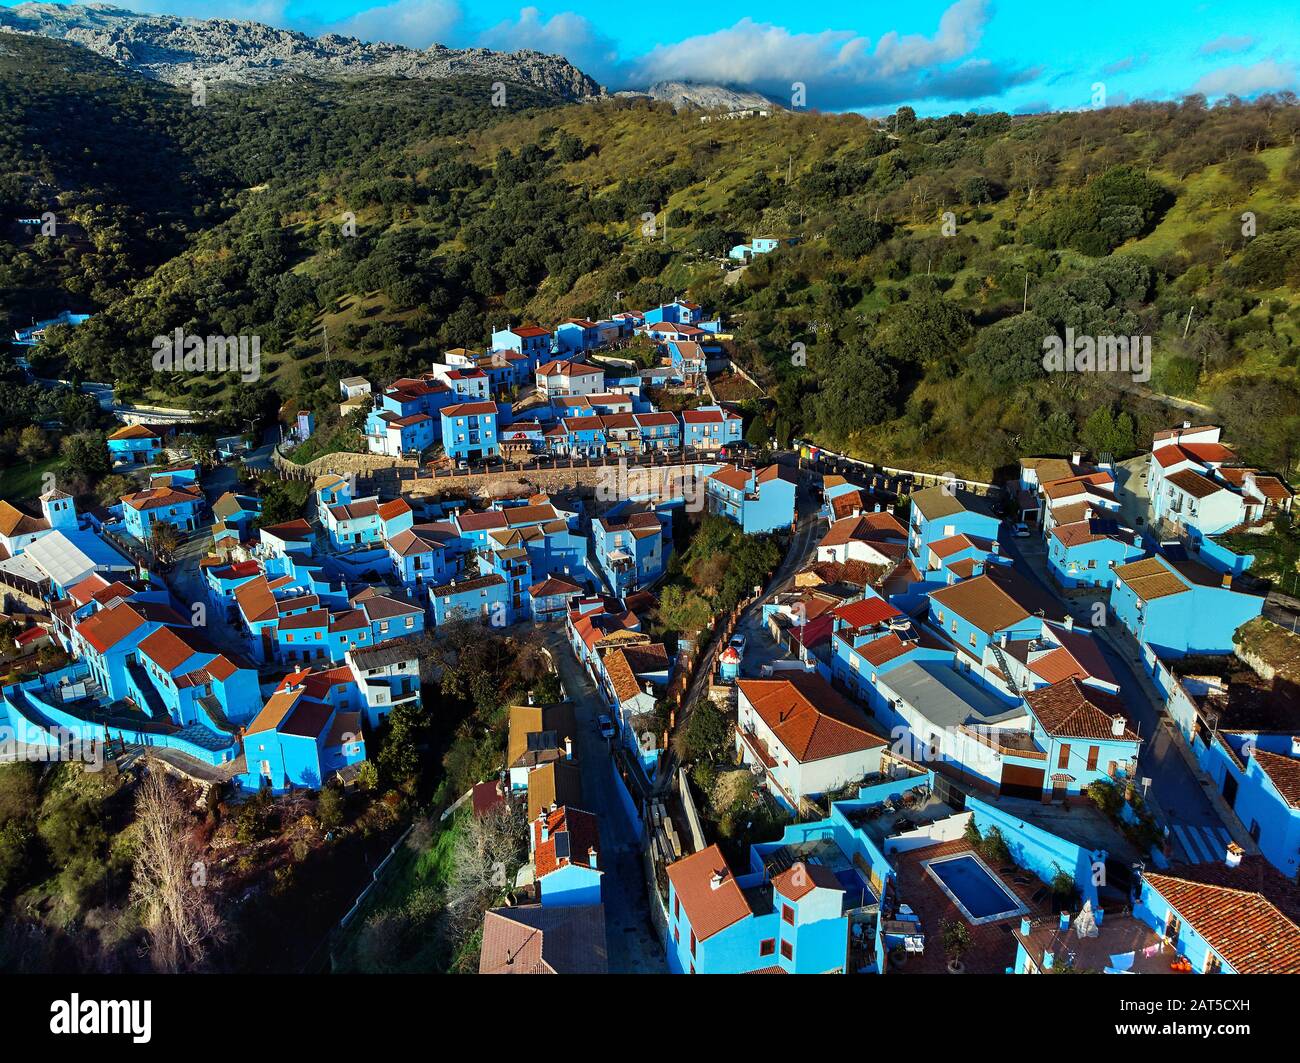 Luftbild Júzcar Stadt bemerkenswerter Ort alle Wohnhäuser in blauer Farbe gemalt, Valle del Genal, Serrania de Ronda, Málaga. Andalusien, Spanien Stockfoto